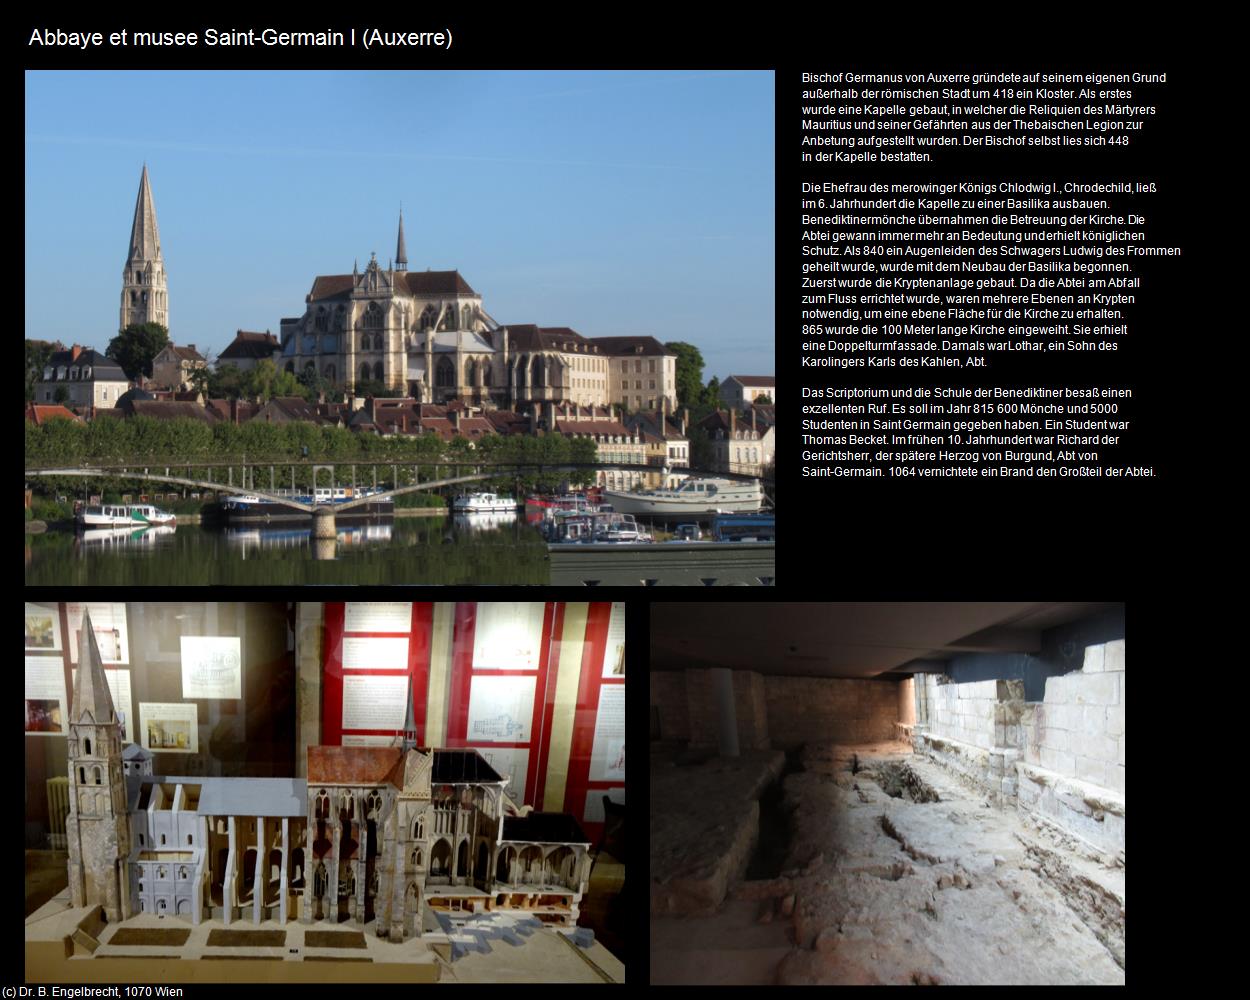 Abbaye et musee Saint-Germain I (Auxerre (FR-BFC)         ) in Kulturatlas-FRANKREICH